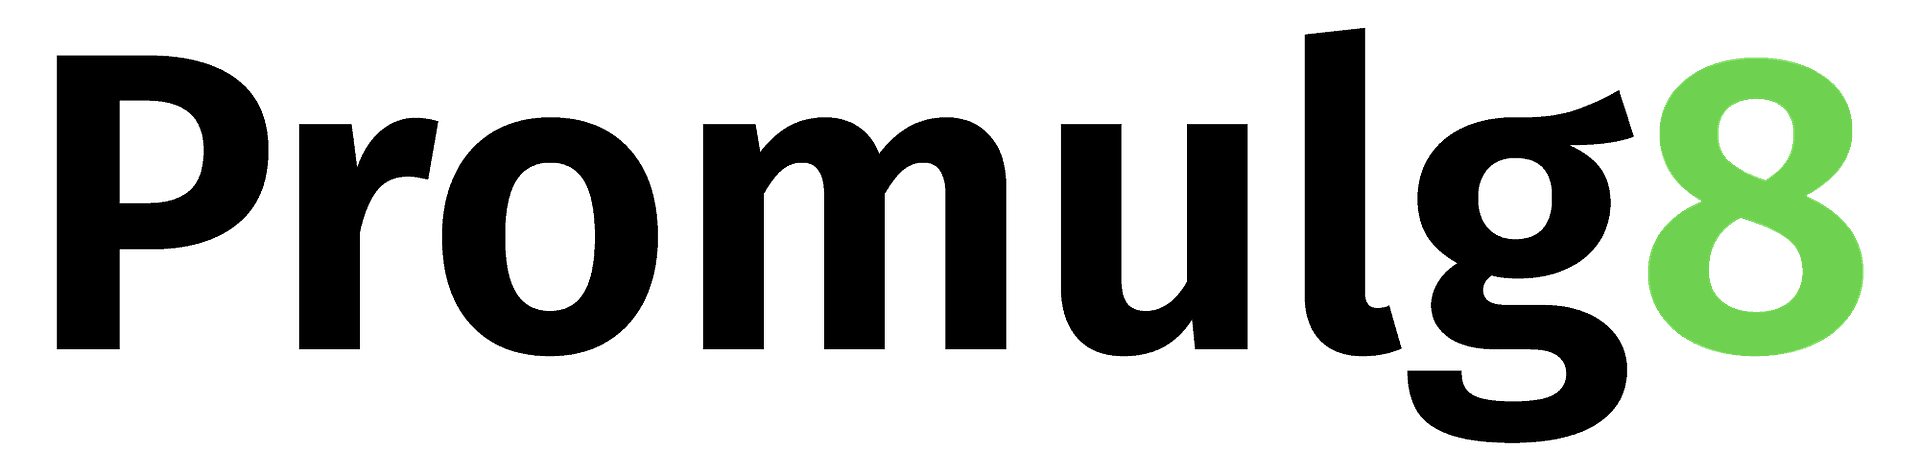 Promulg8 logo